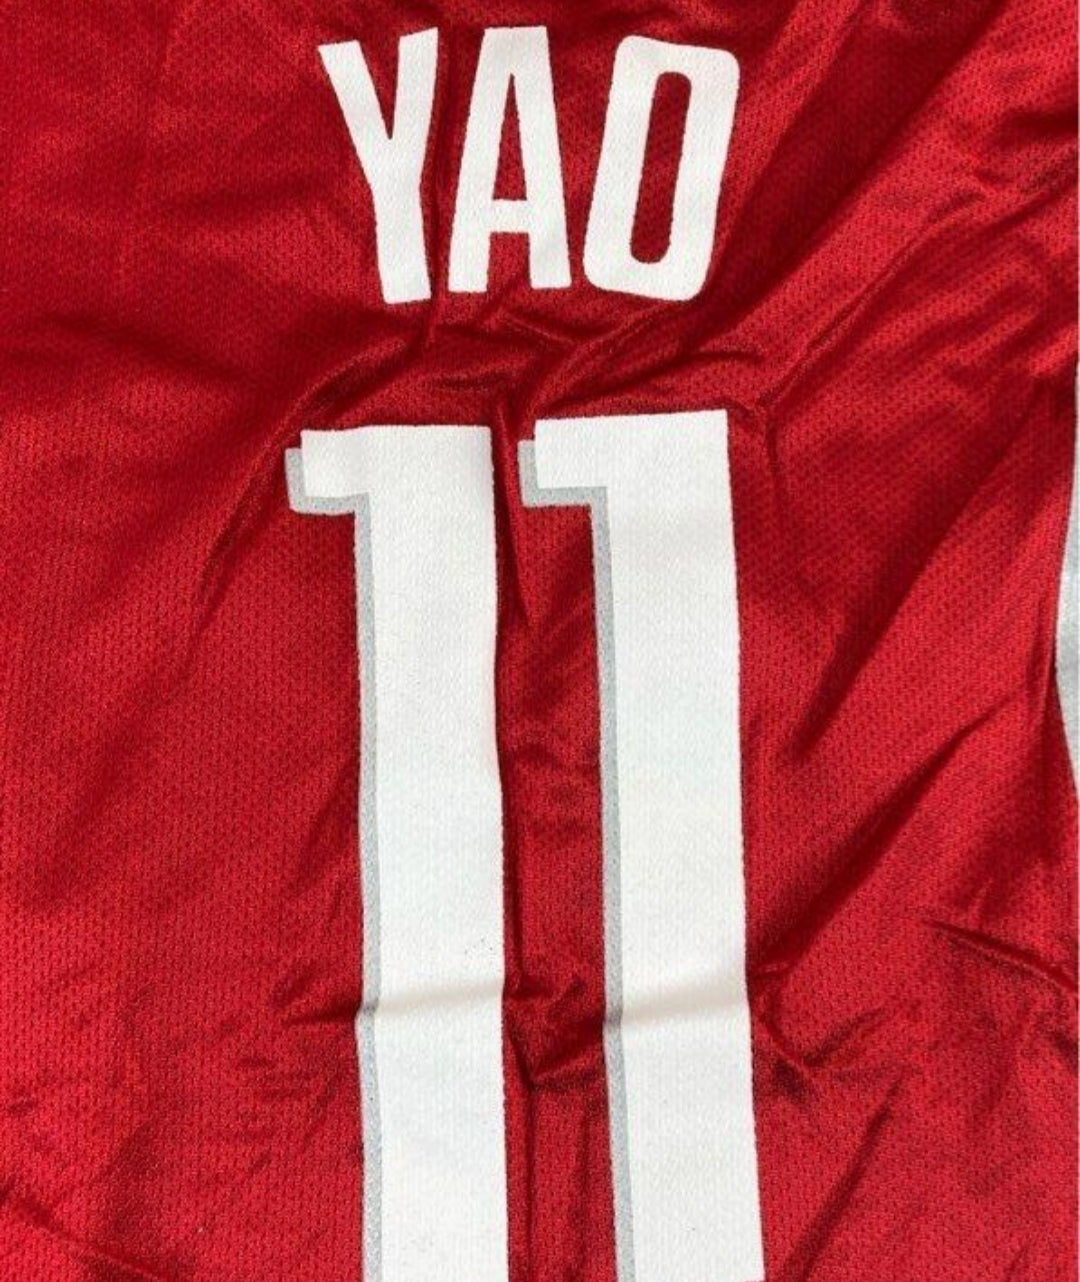 NBA *Adidas Houston Rockets 'Yao Ming' #11 Red Men's Jersey (Size Medium)